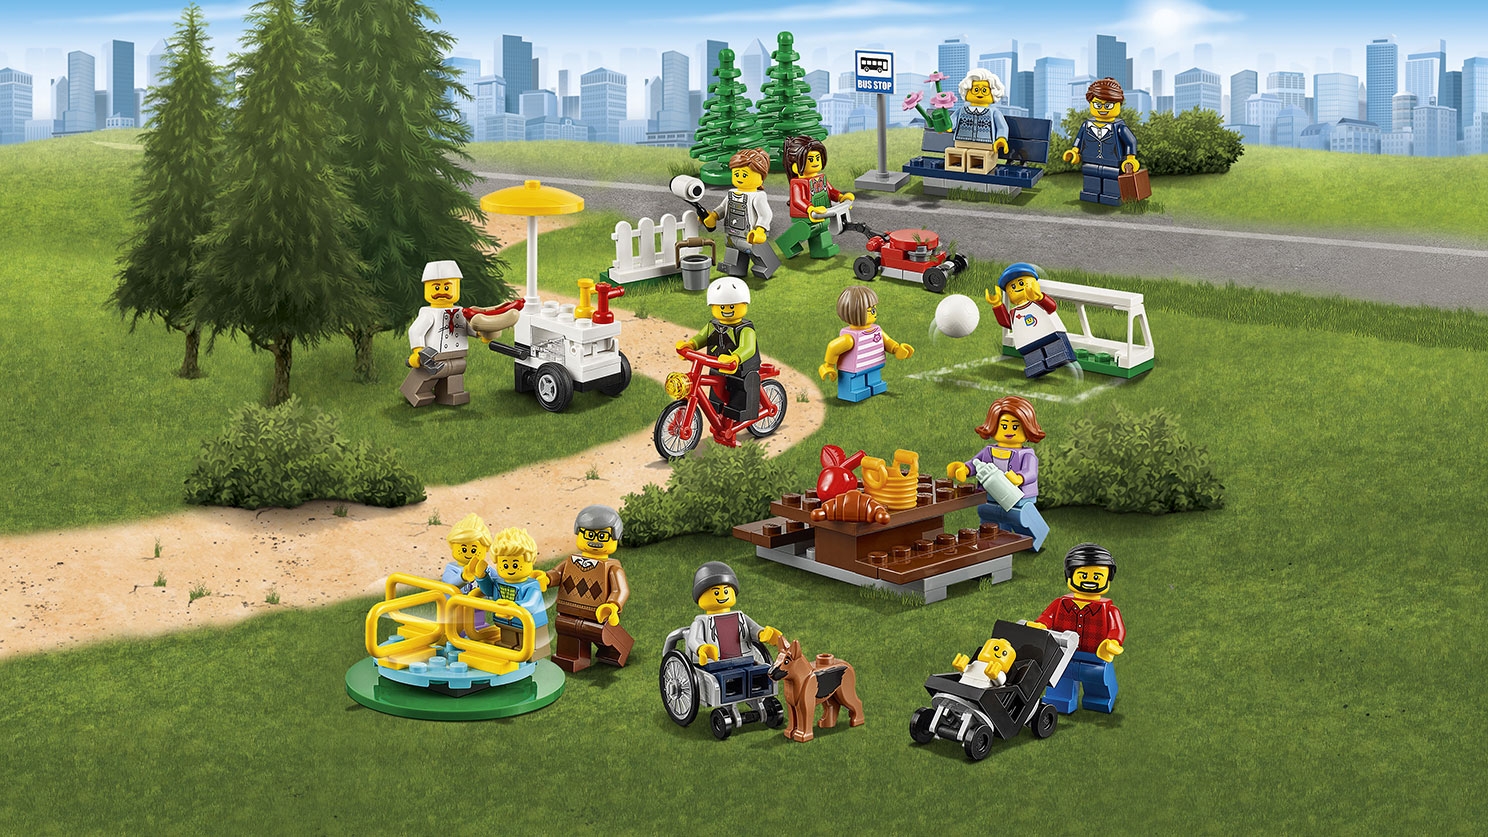 zebra labyrint Klassifikation Fun in the park - City People Pack 60134 - LEGO® City Sets - LEGO.com for  kids